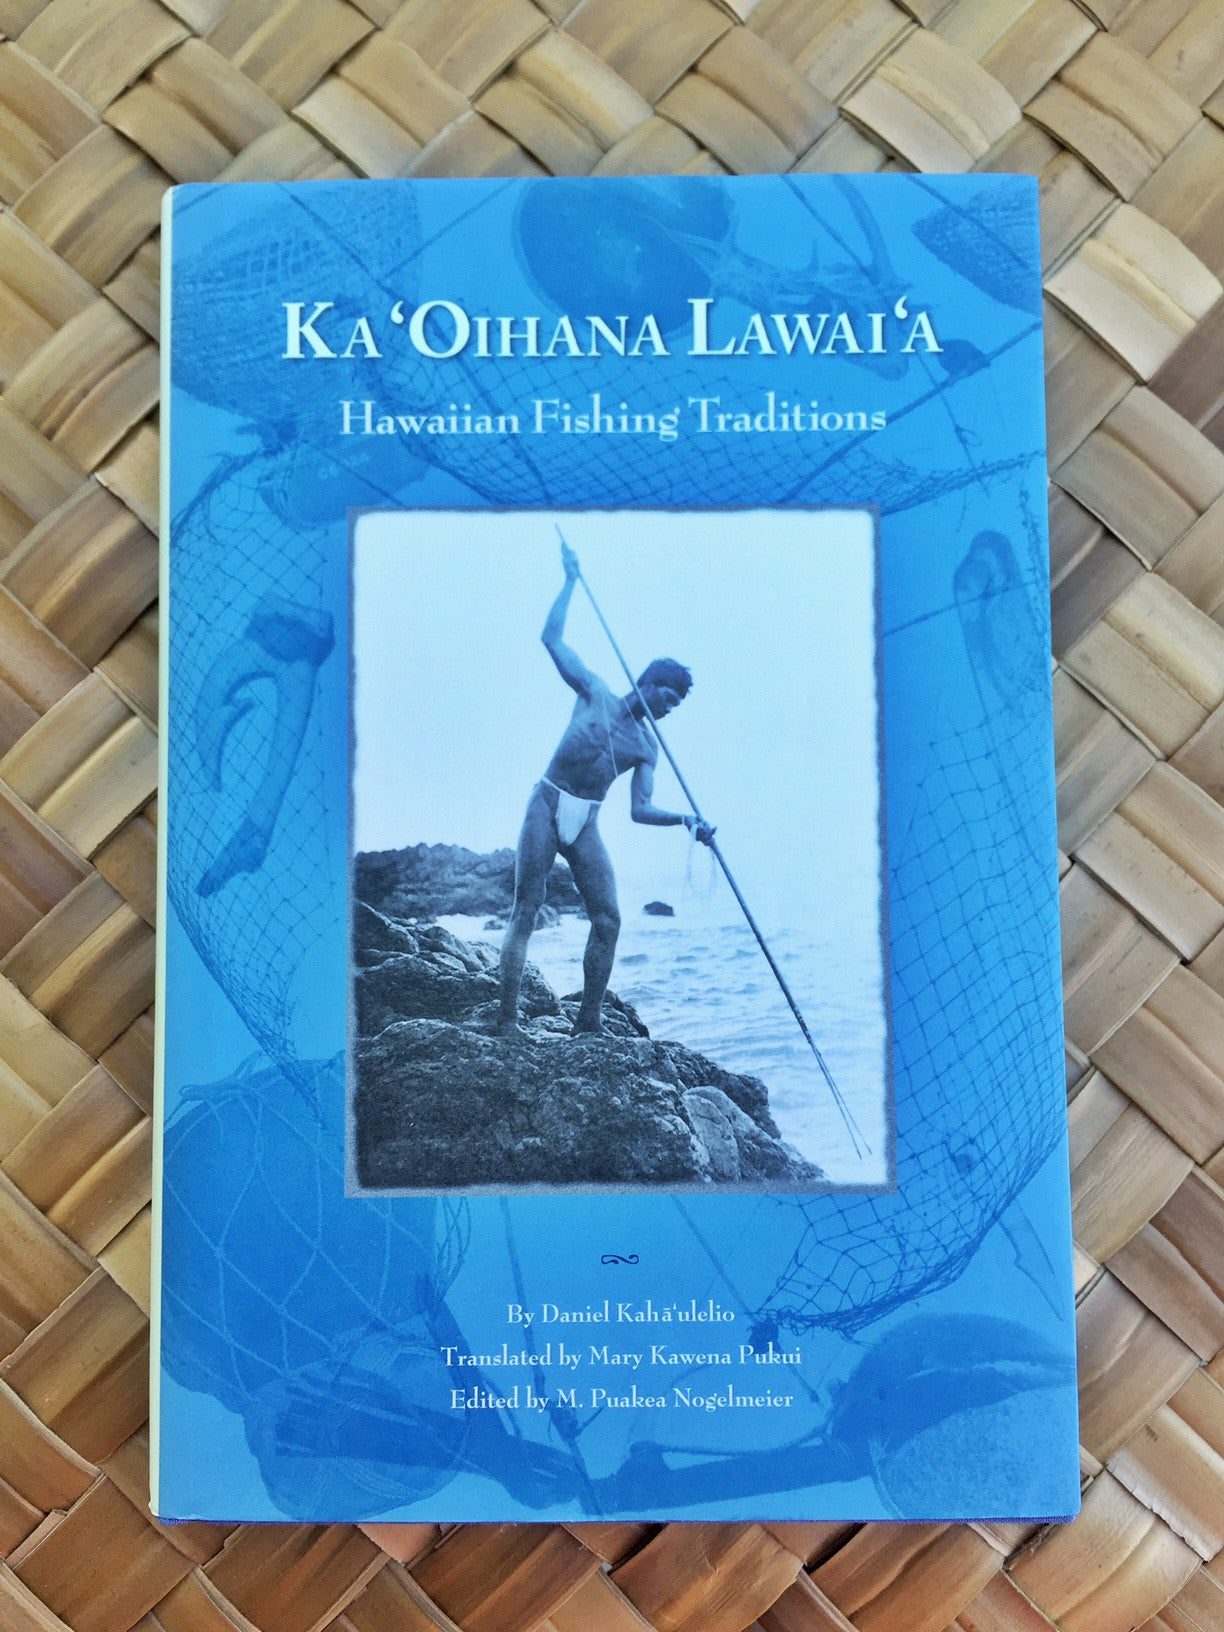 http://kaimanajerky.com/cdn/shop/articles/Ka-_oihana-lawai_a-Hawaiian-fishing-traditions-by-Daniel-Kaha_ulelio-book-cover.jpg?v=1457645662